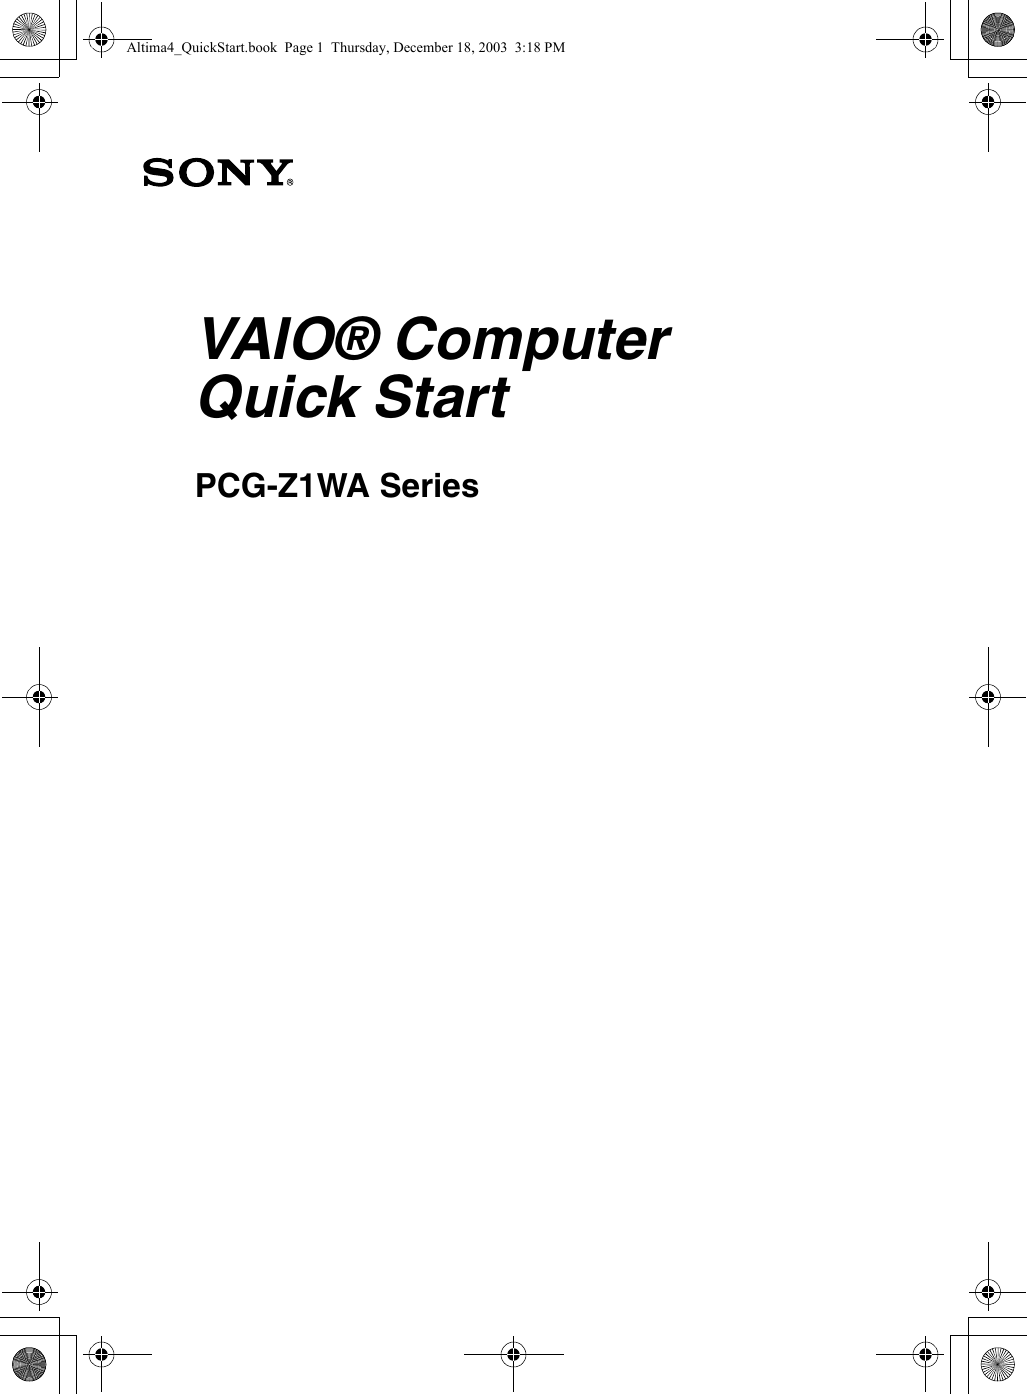 VAIO® ComputerQuick StartPCG-Z1WA Series Altima4_QuickStart.book  Page 1  Thursday, December 18, 2003  3:18 PM